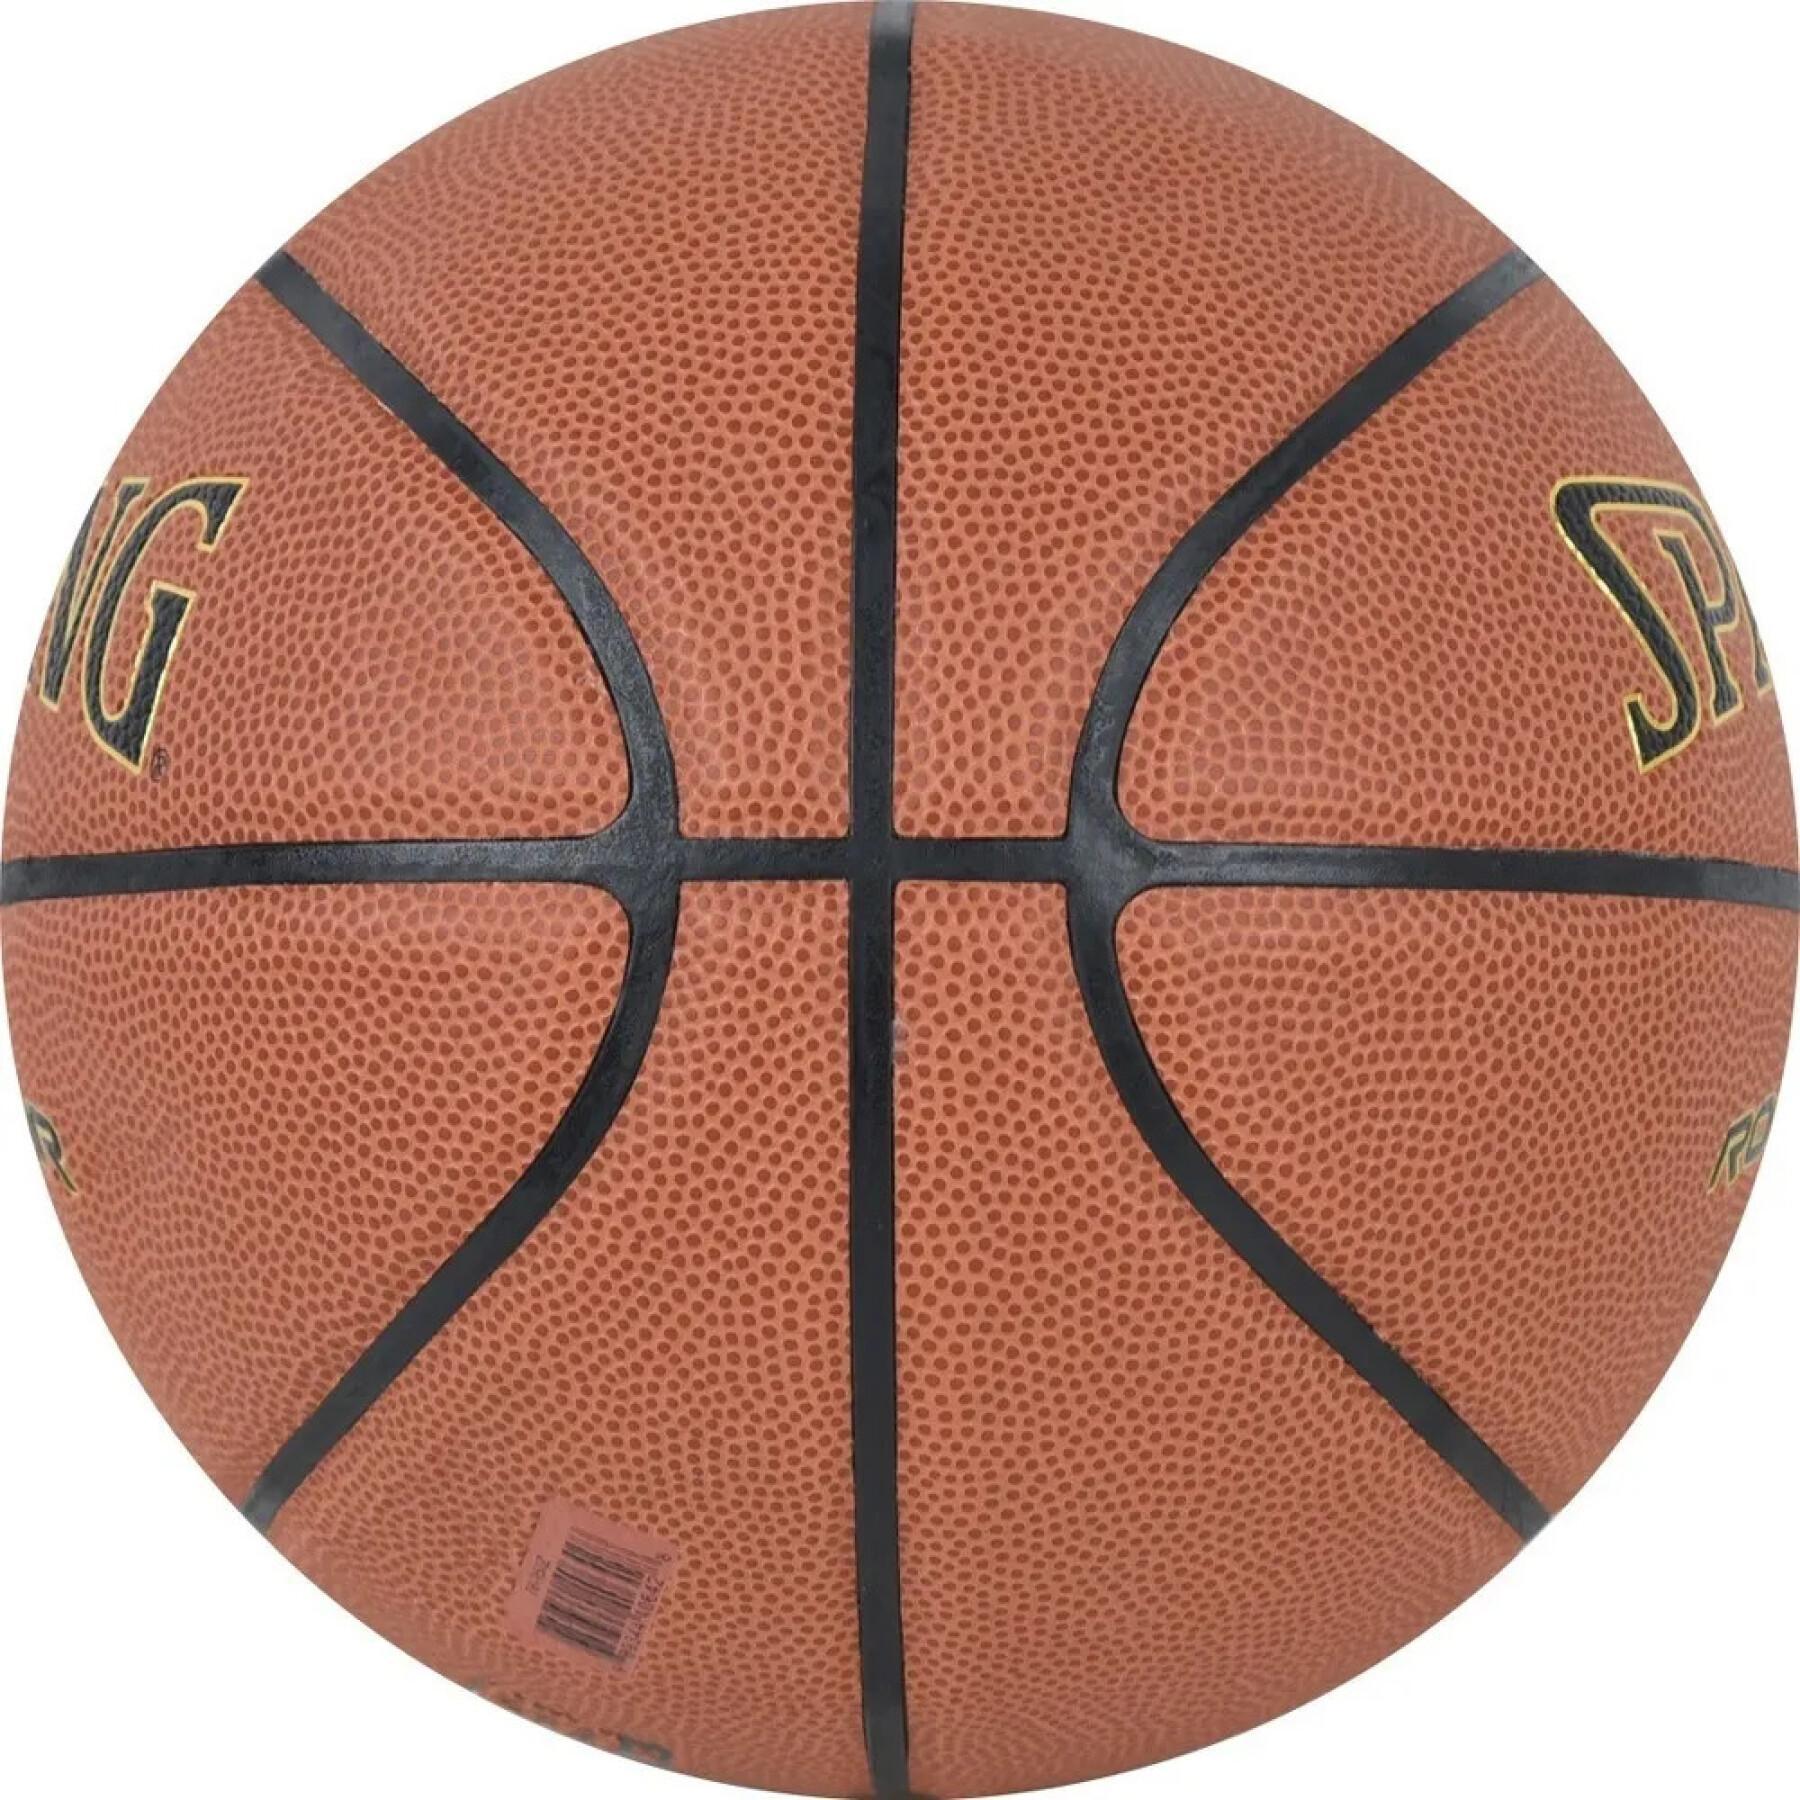 Basketball Spalding Rookie Gear Composite